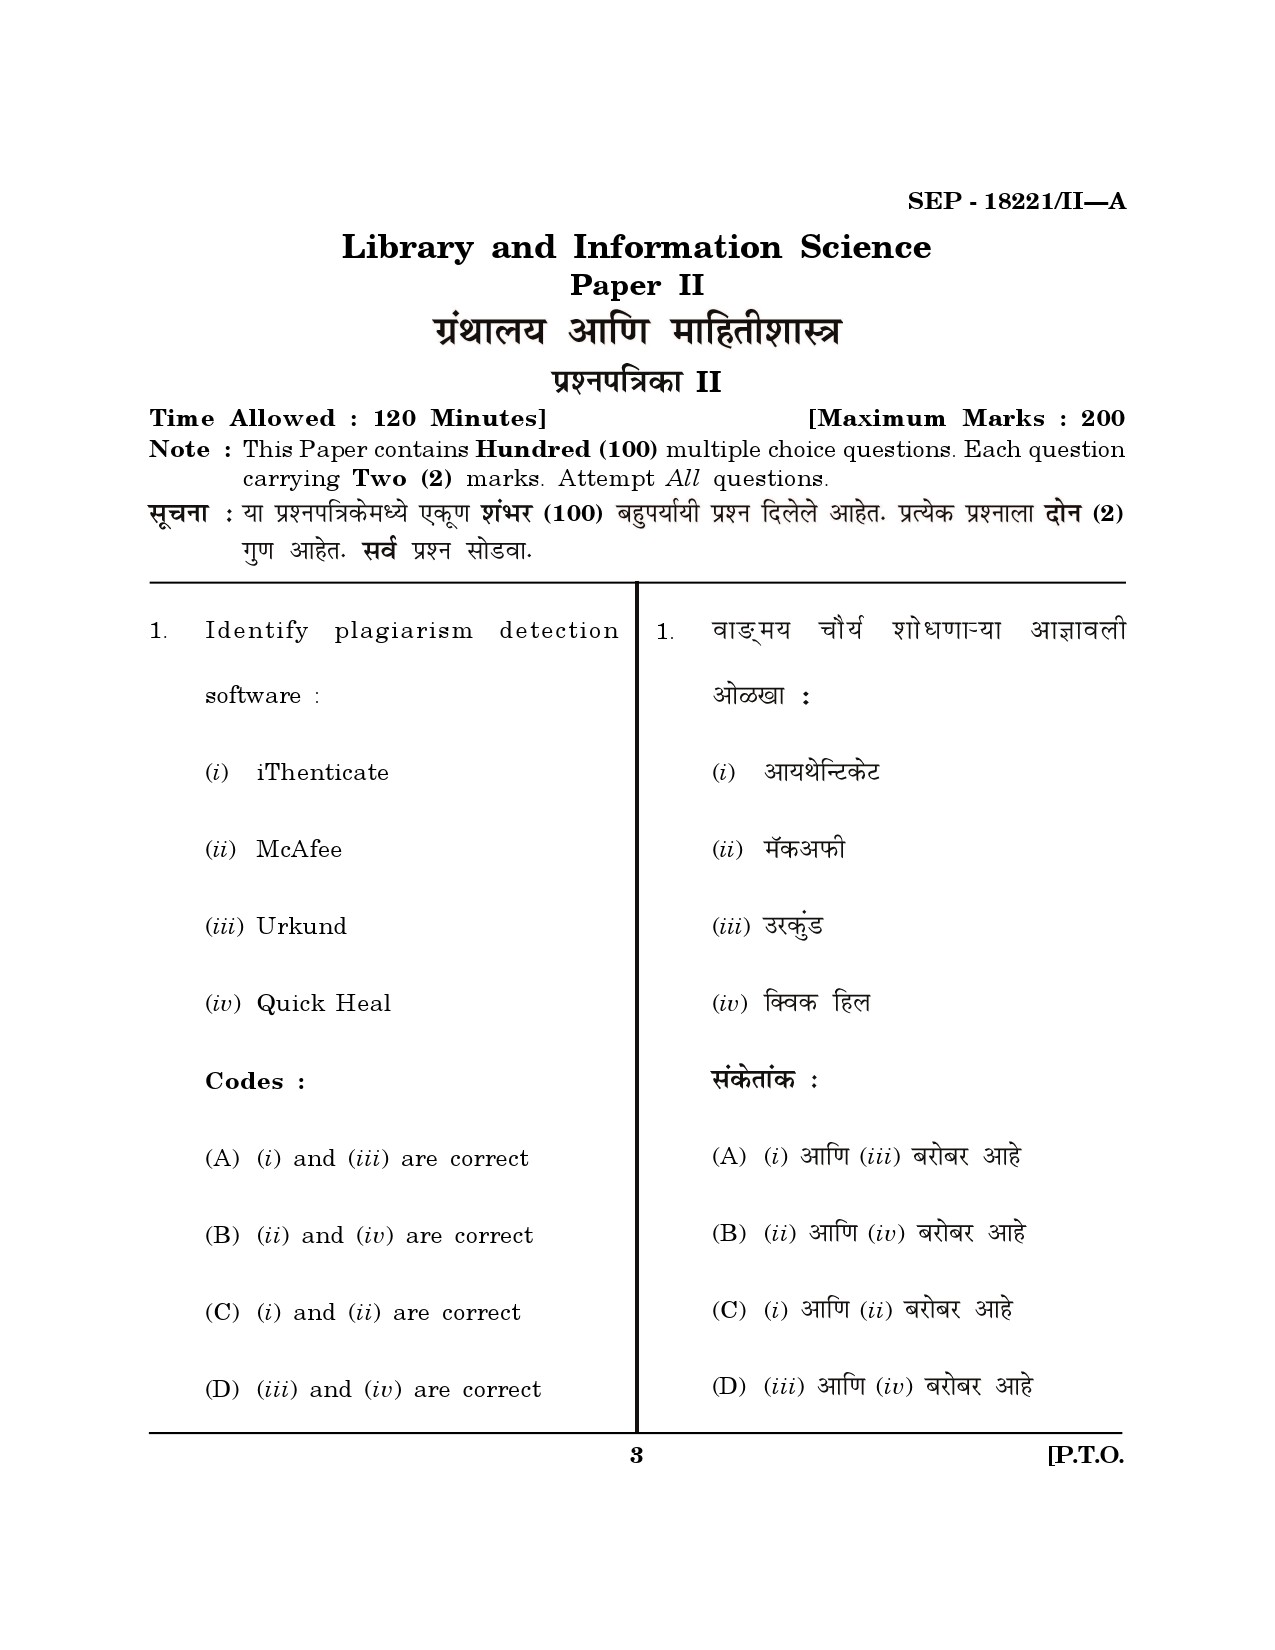 Maharashtra SET Library Information Science Exam Question Paper September 2021 2